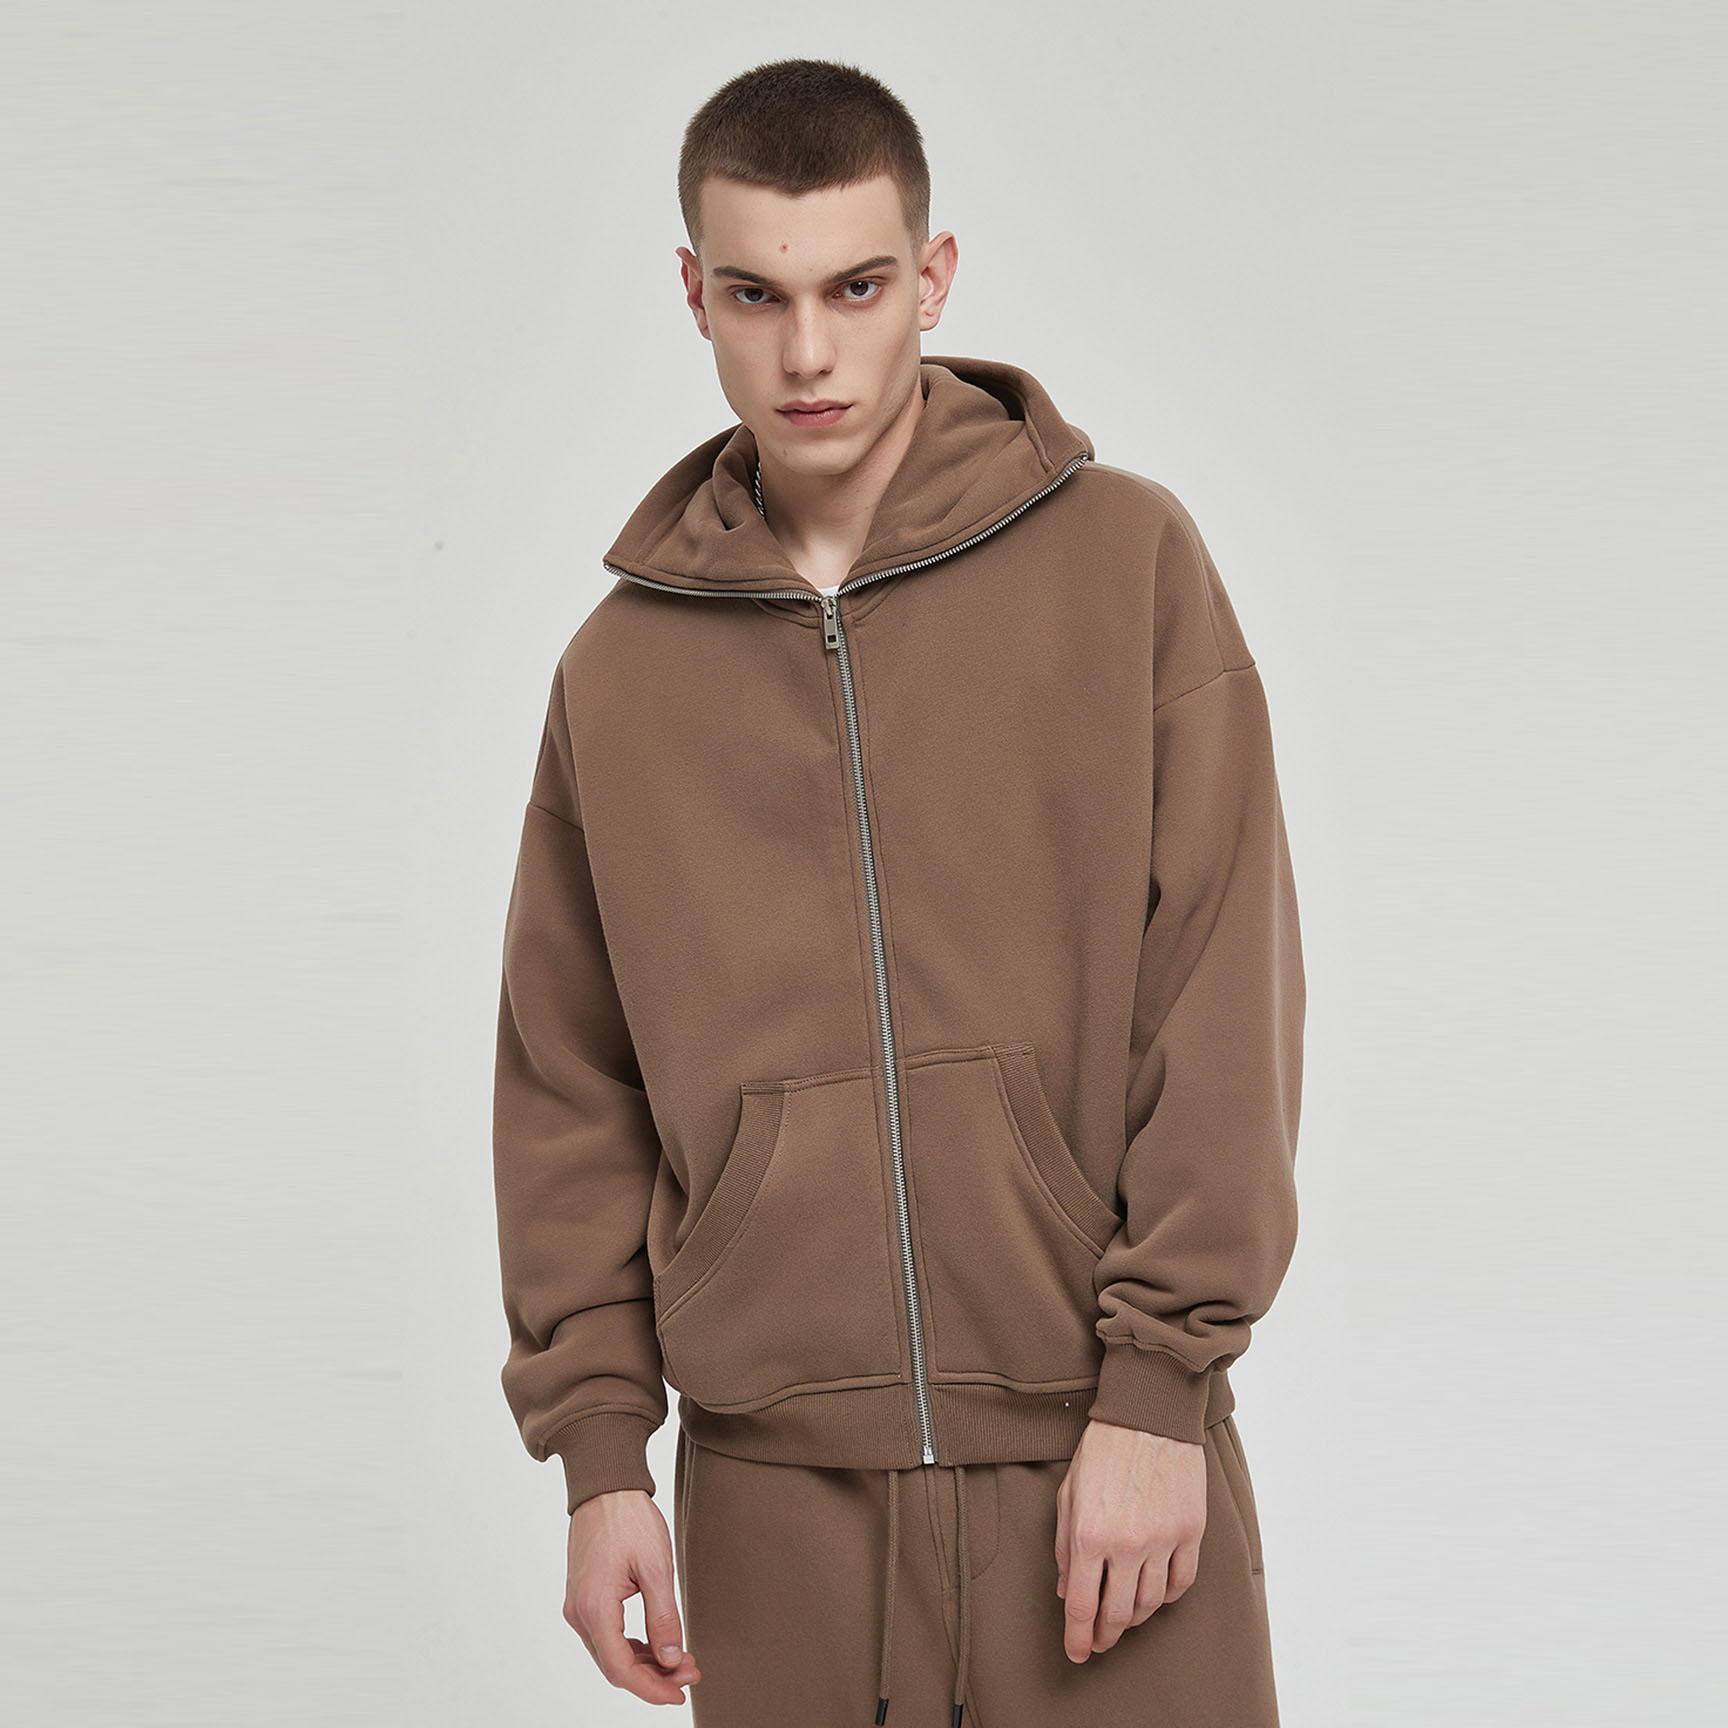 Men's french terry full zip hoodie wholesale 丨 Lezhou Garment